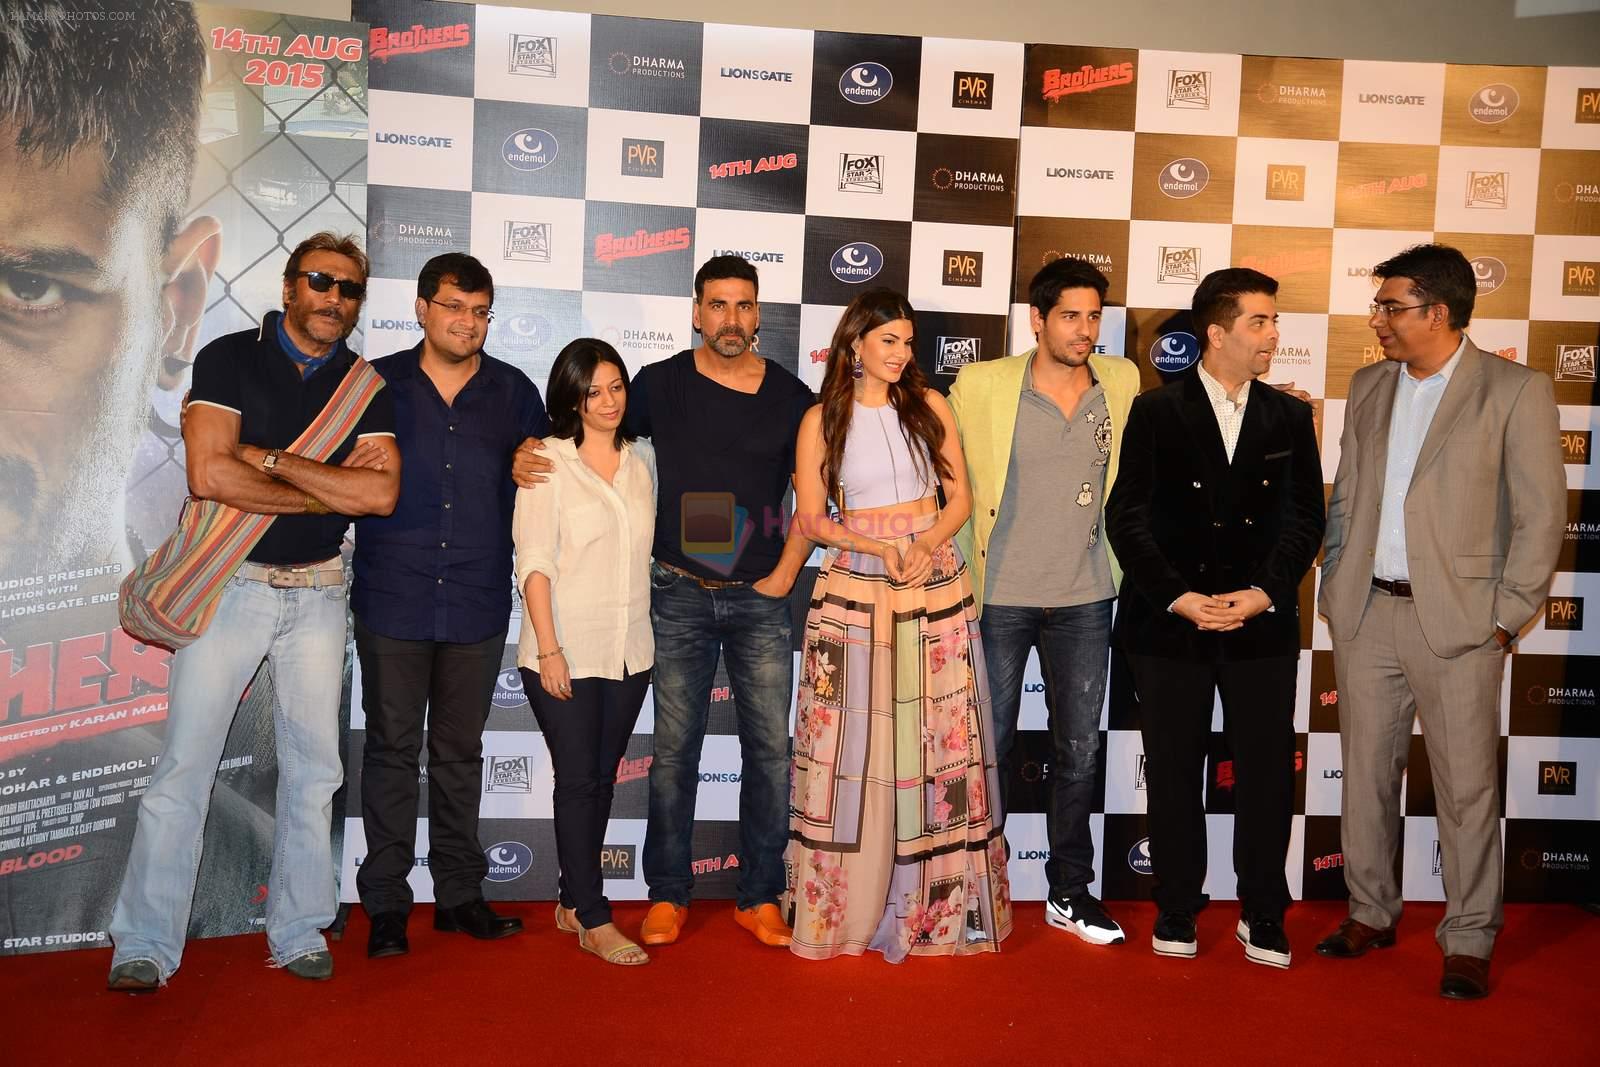 Jackie Shroff, Akshay Kumar, Jacqueline Fernandez, Sidharth Malhotra, Karan Johar at Brothers trailor launch in Mumbai on 10th June 2015